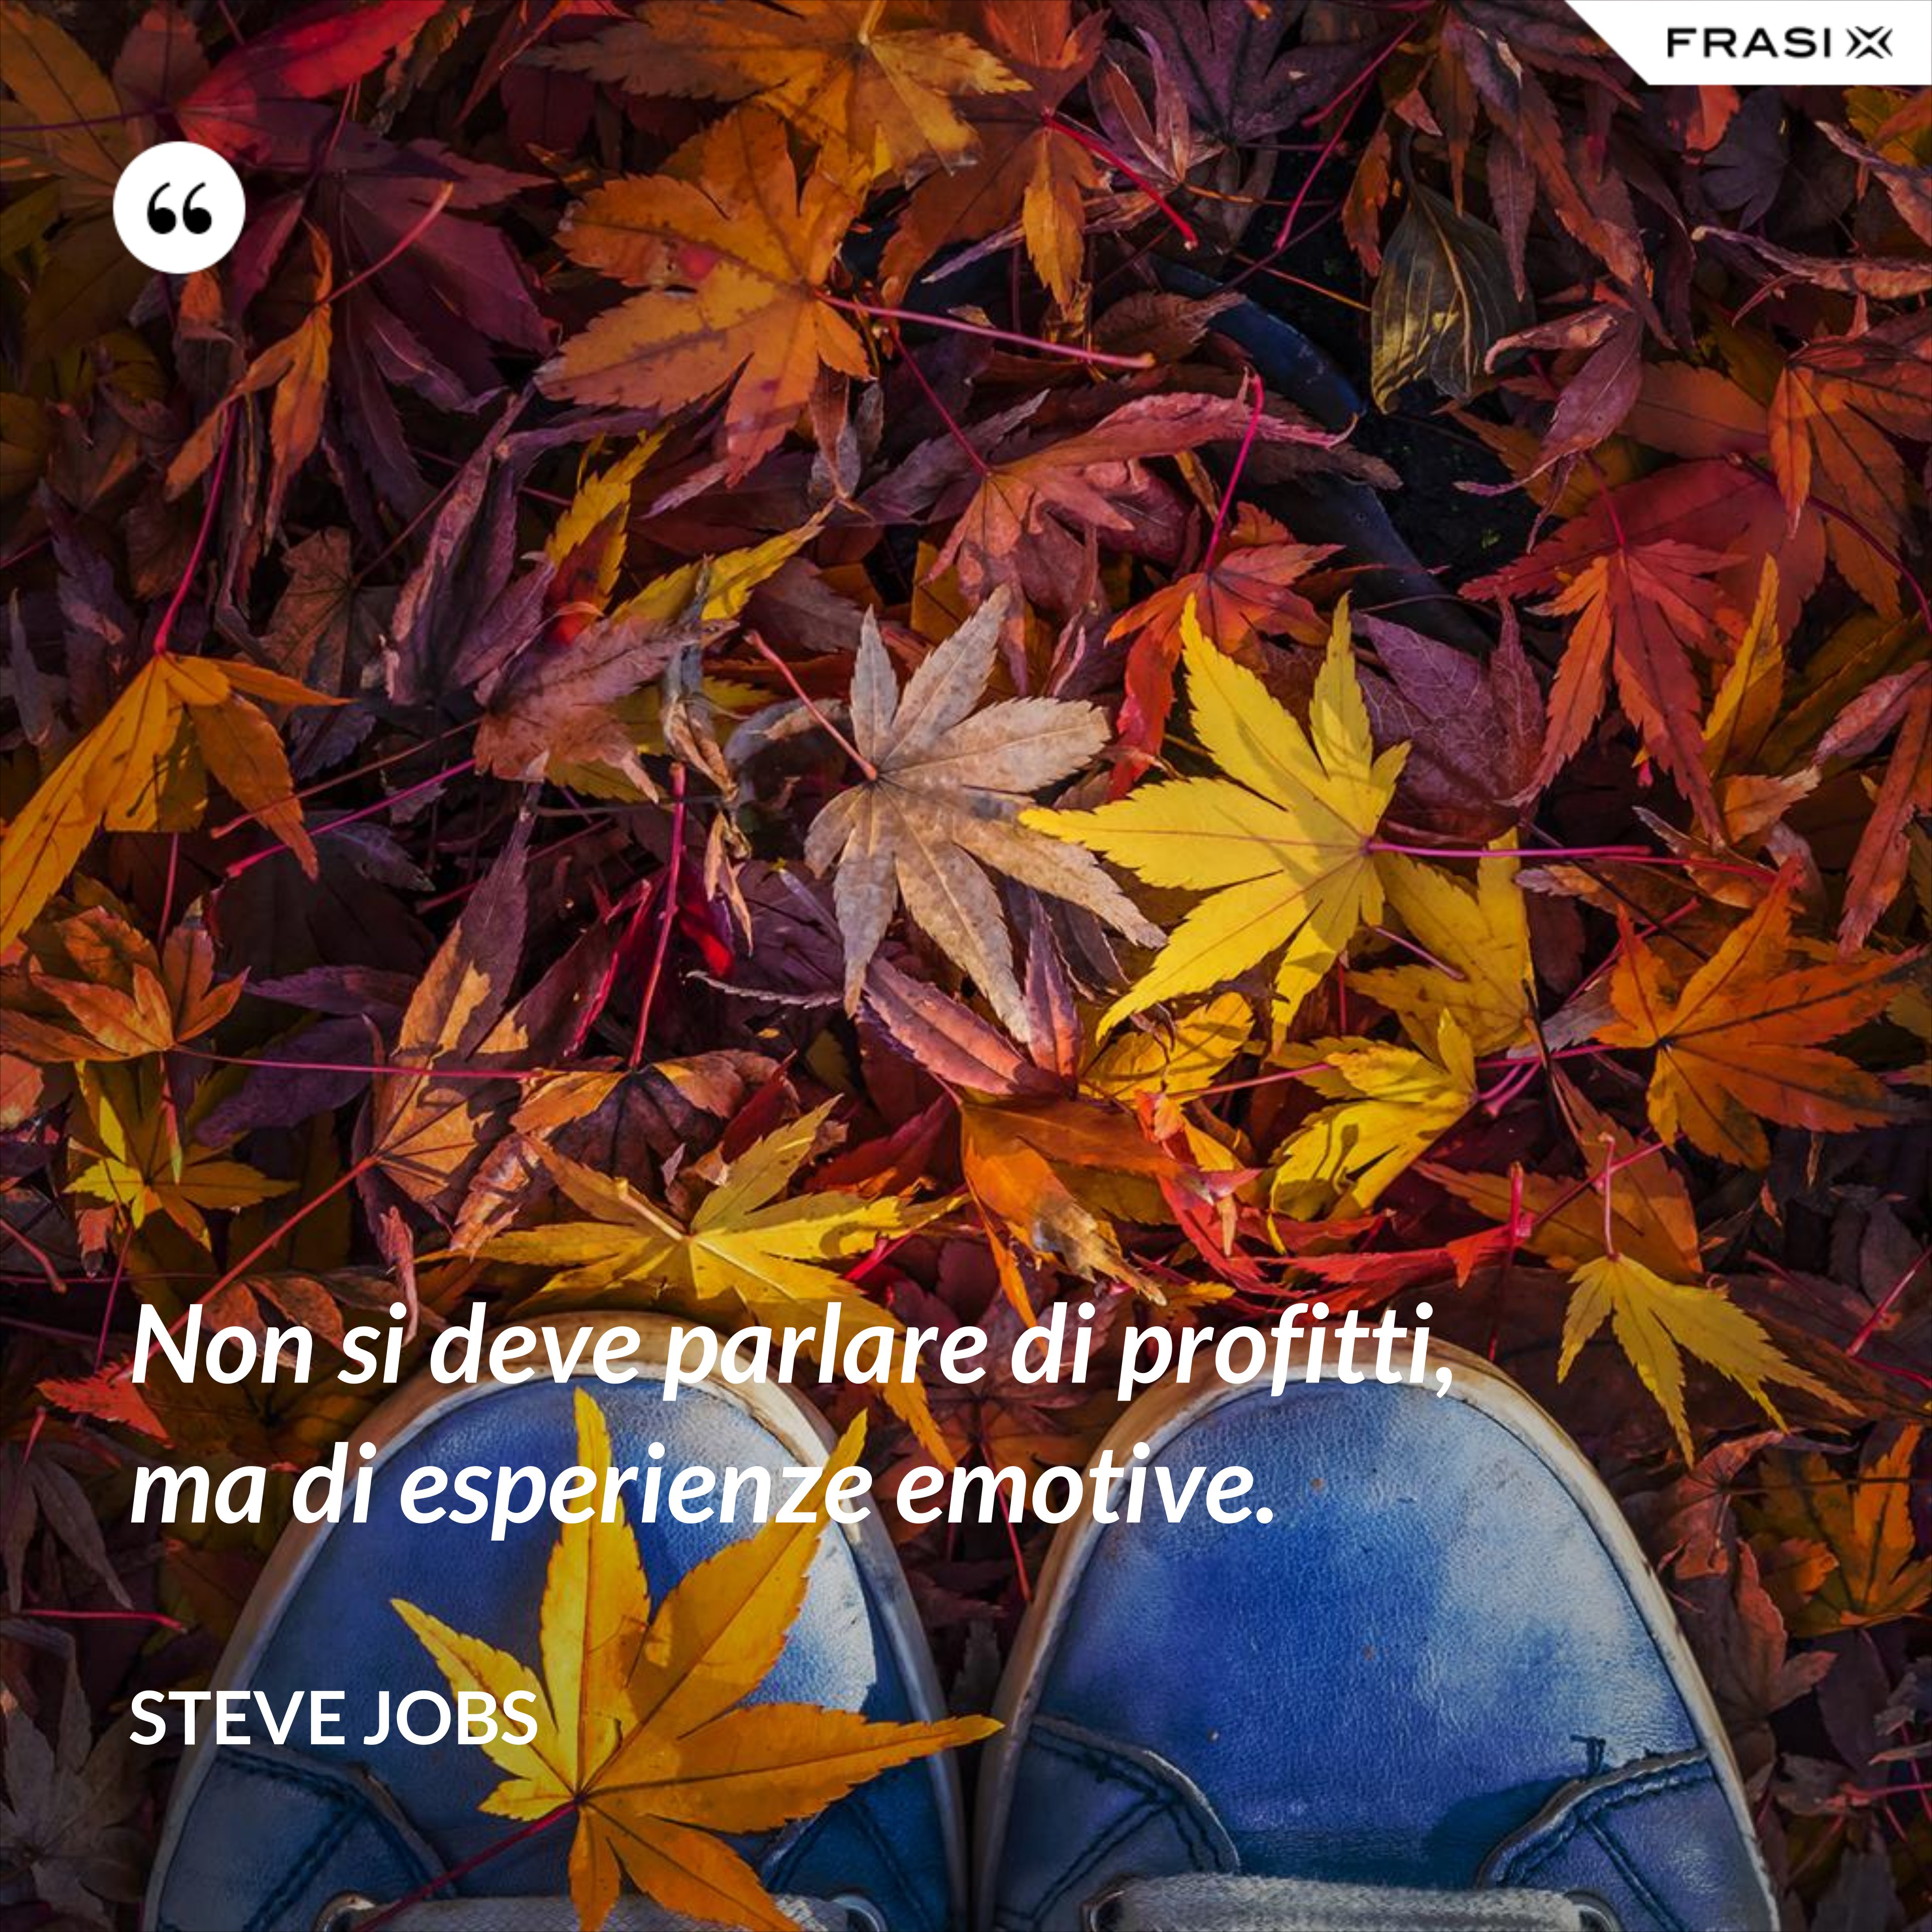 Non si deve parlare di profitti, ma di esperienze emotive. - Steve Jobs